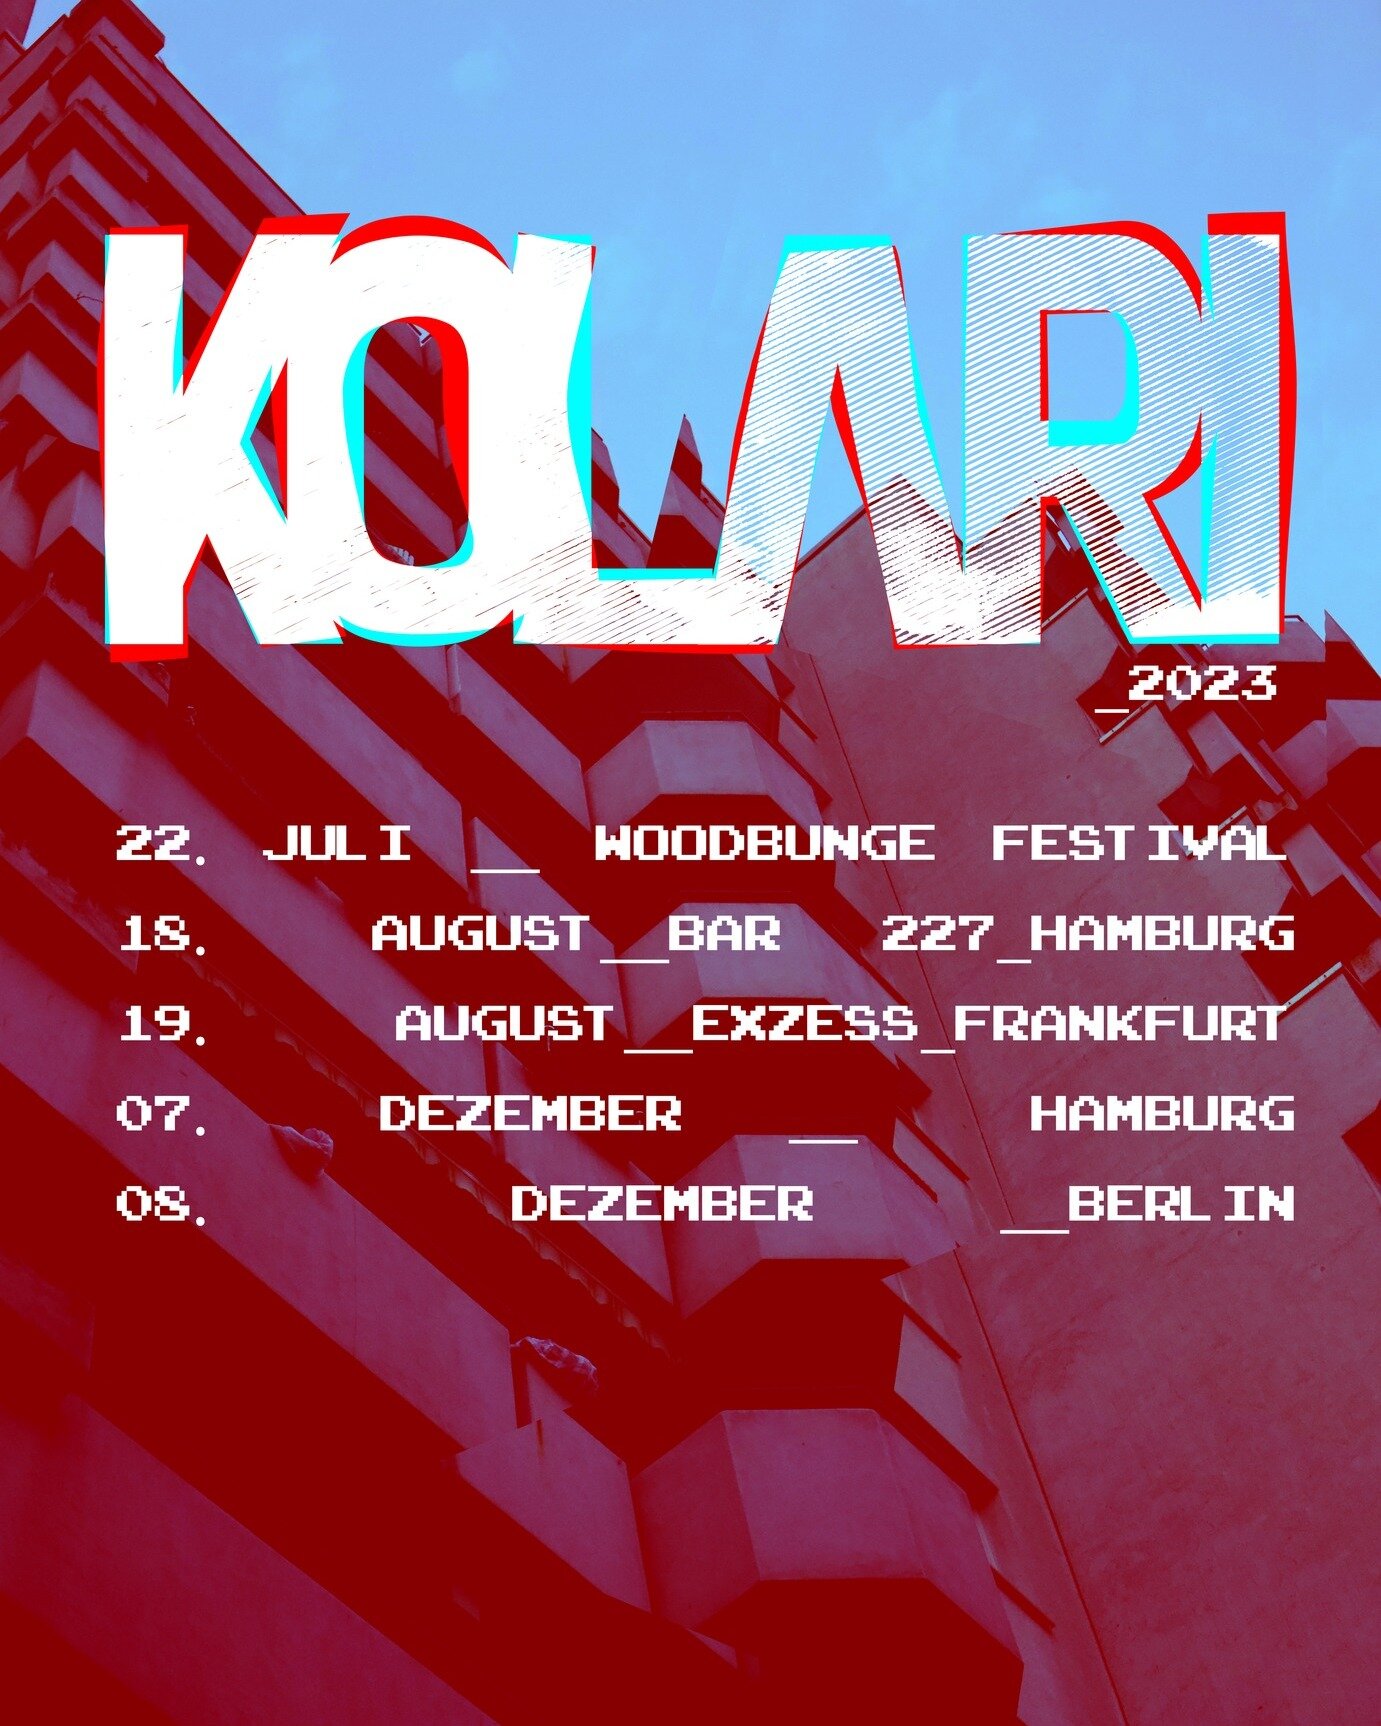 Und weiter geht's! Kommt, seht selbst:

22. JULY 2023 - WOODBUNGE FESTIVAL
18. AUGUST - BAR 227 / HAMBURG
19. AUGUST 2023 - EXZESS / FRANKFURT
07. DEZEMBER - tba / HAMBURG
08. DEZEMBER - tba / BERLIN

#tour #ontour #hamburg #hardcore #posthardcore #d